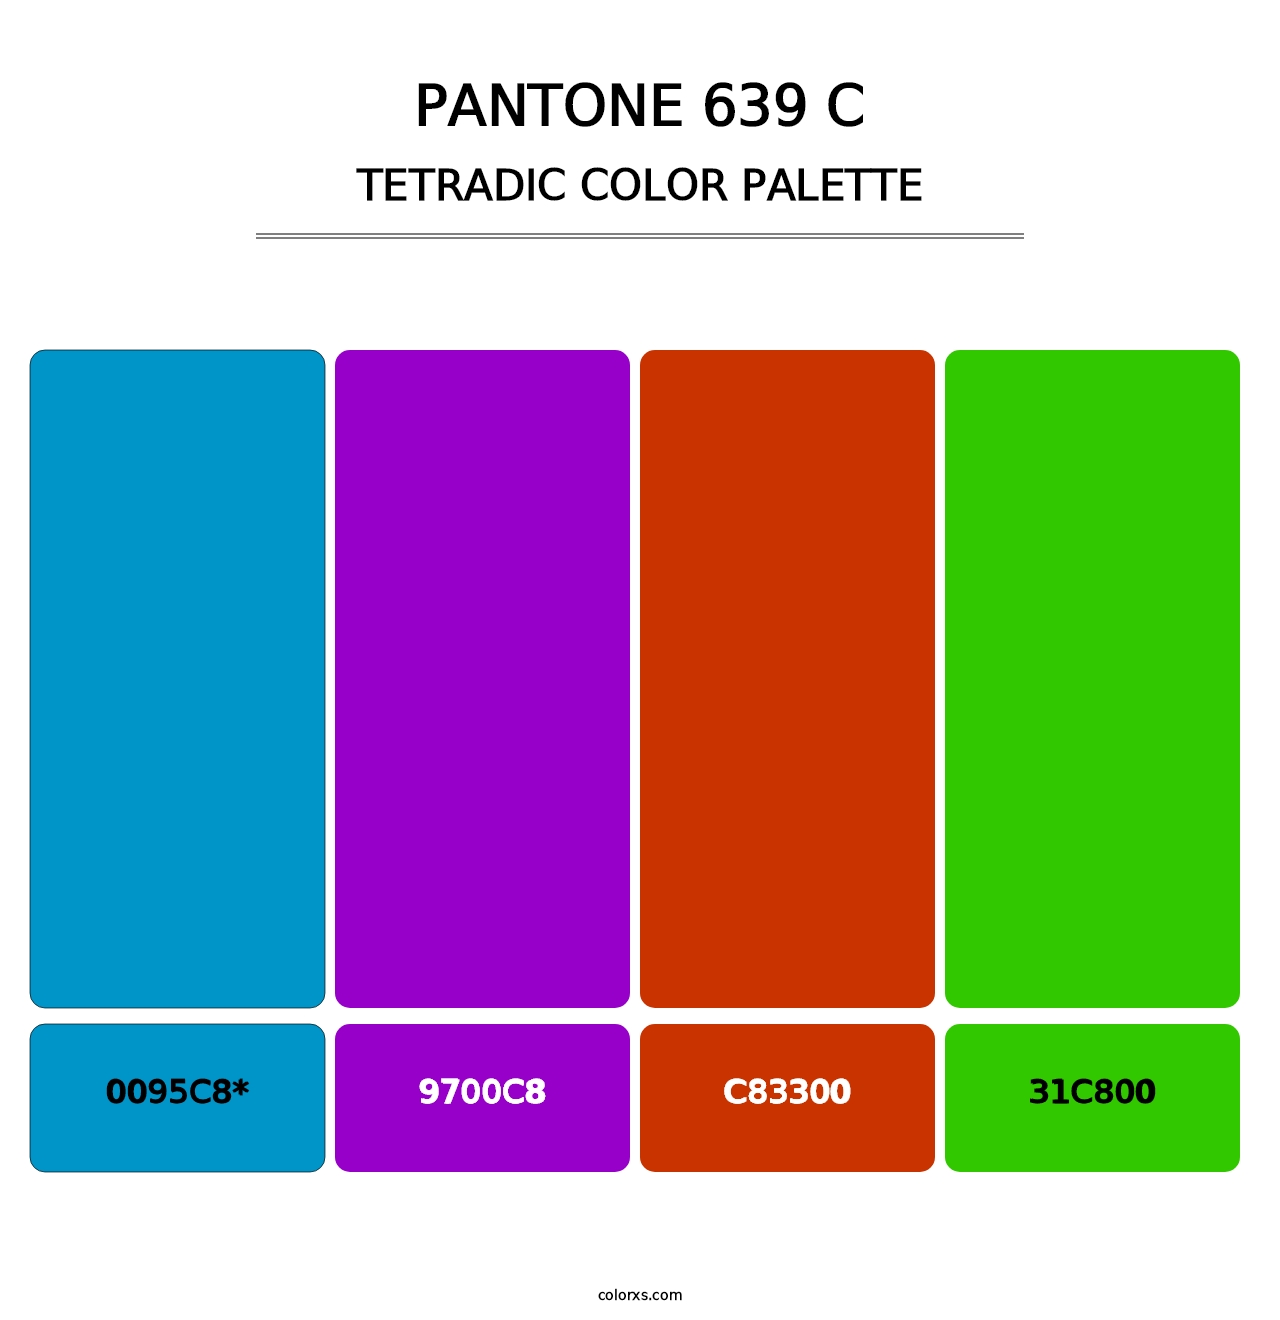 PANTONE 639 C - Tetradic Color Palette